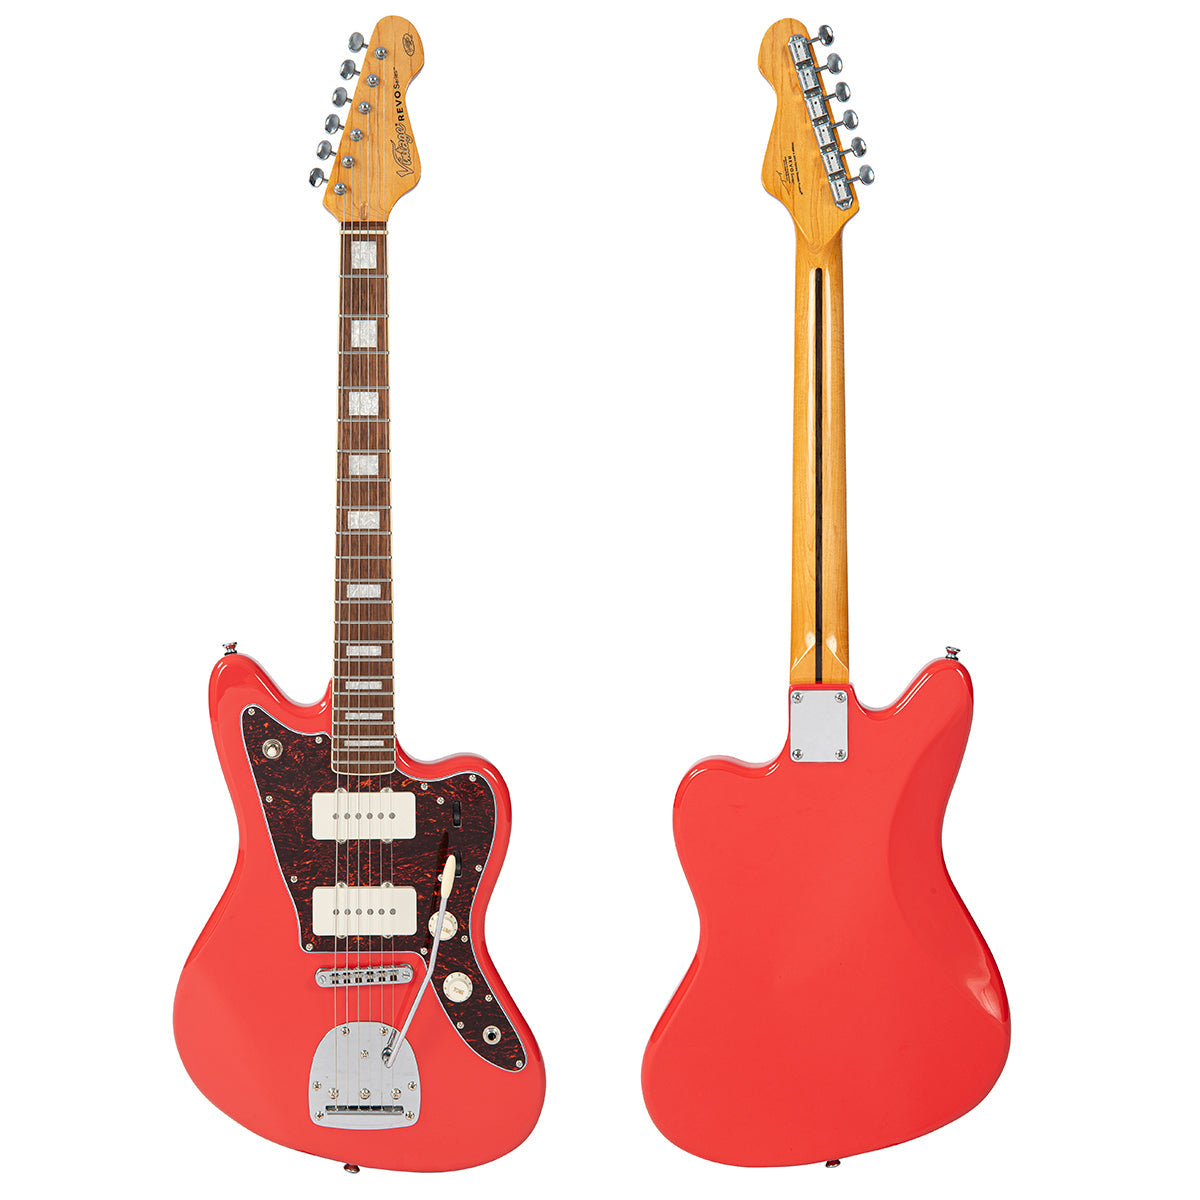 Vintage REVO Series 'Surfmaster 90' Guitar ~ Firenza Red, Electric Guitars for sale at Richards Guitars.